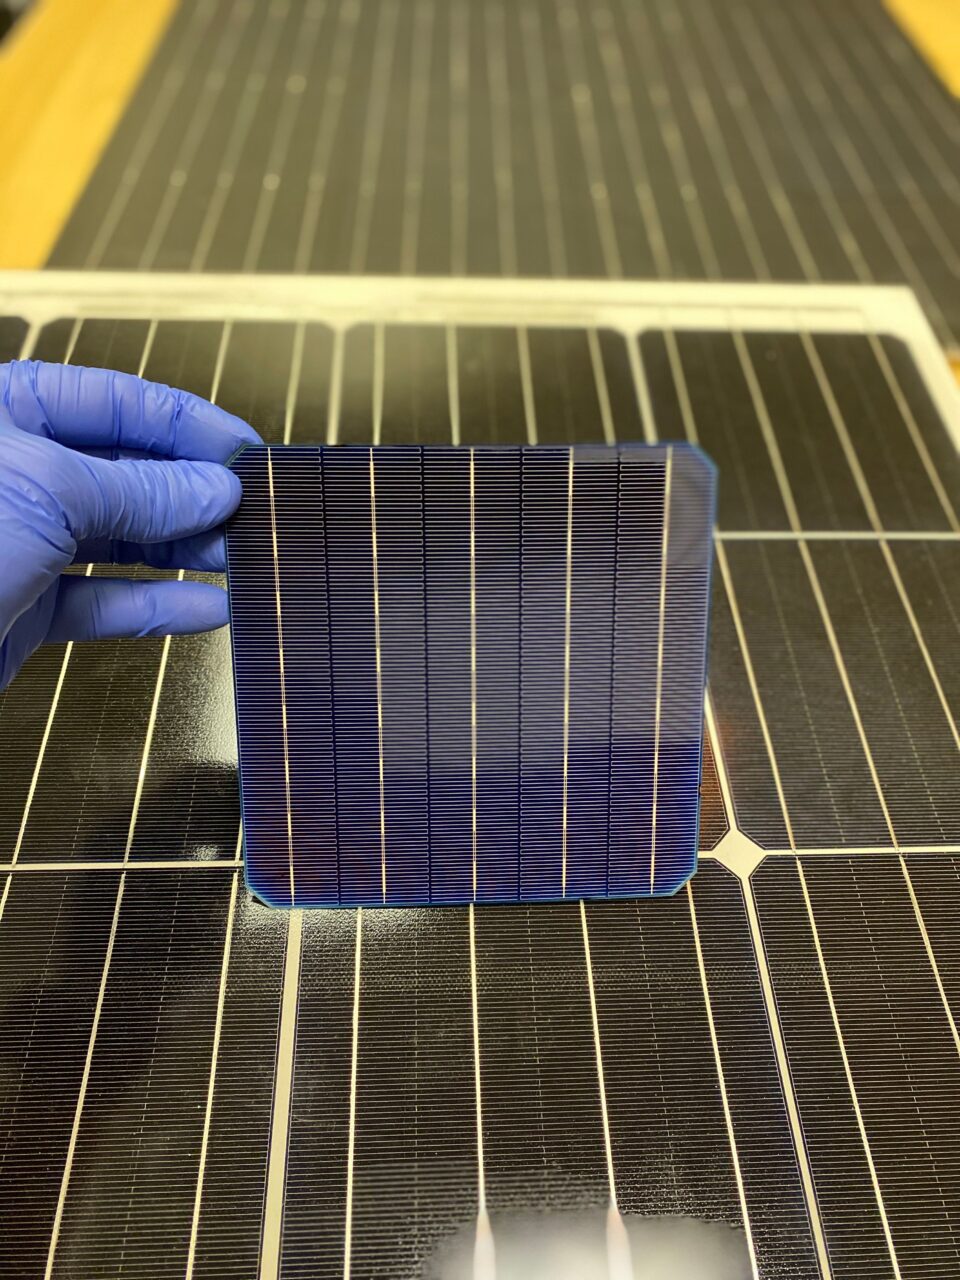 New Solar Technology Promises Improved Performance Cost Savings Laptrinhx News